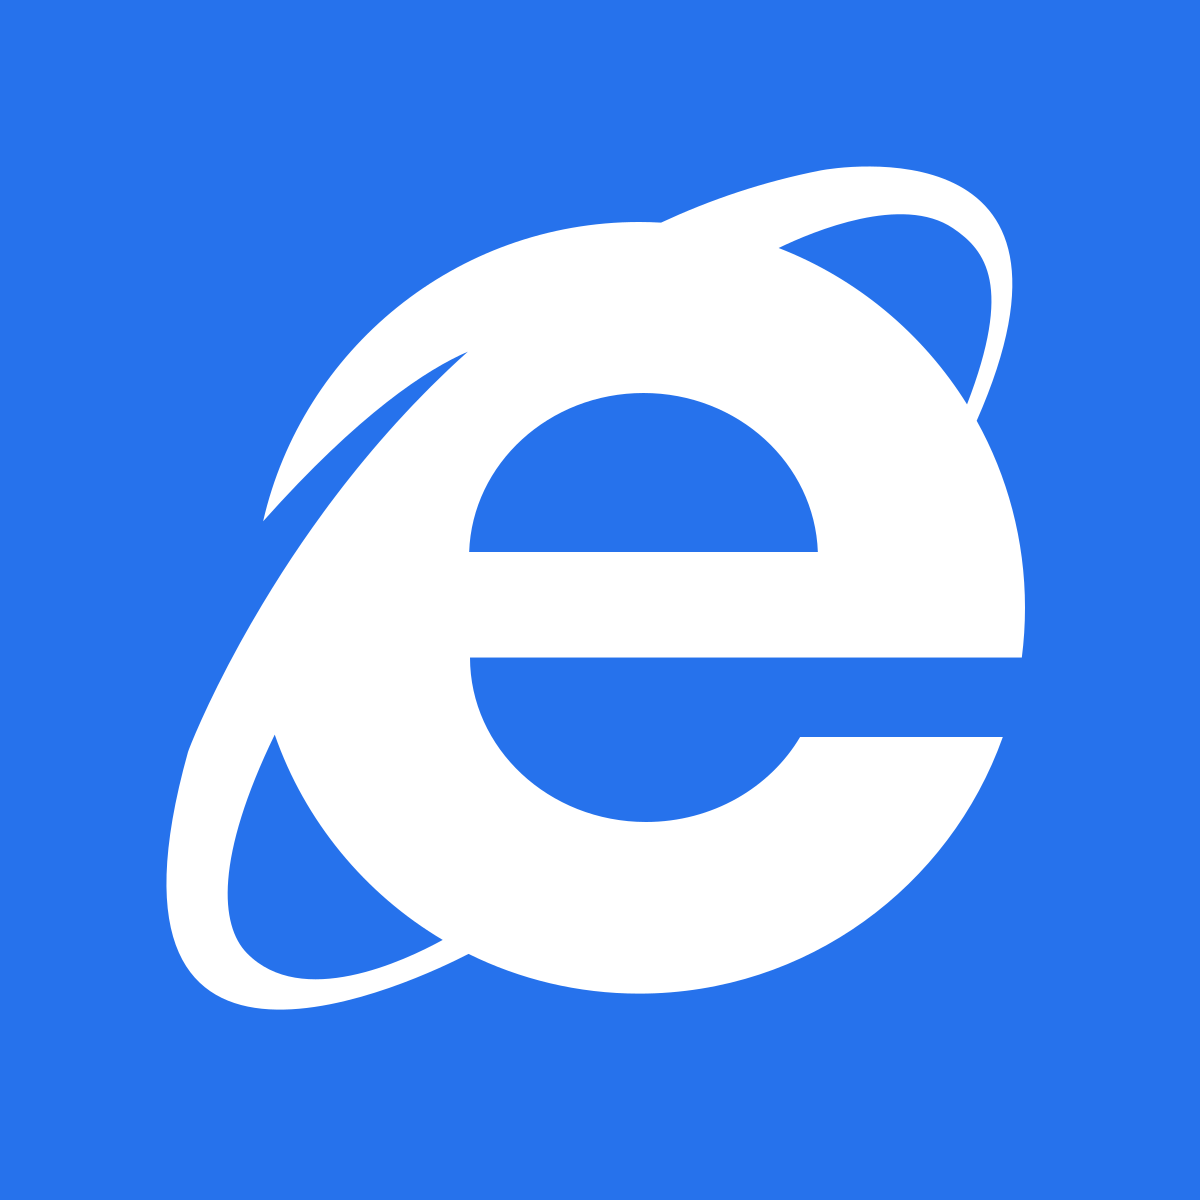 Internet Explorer or Edge logo